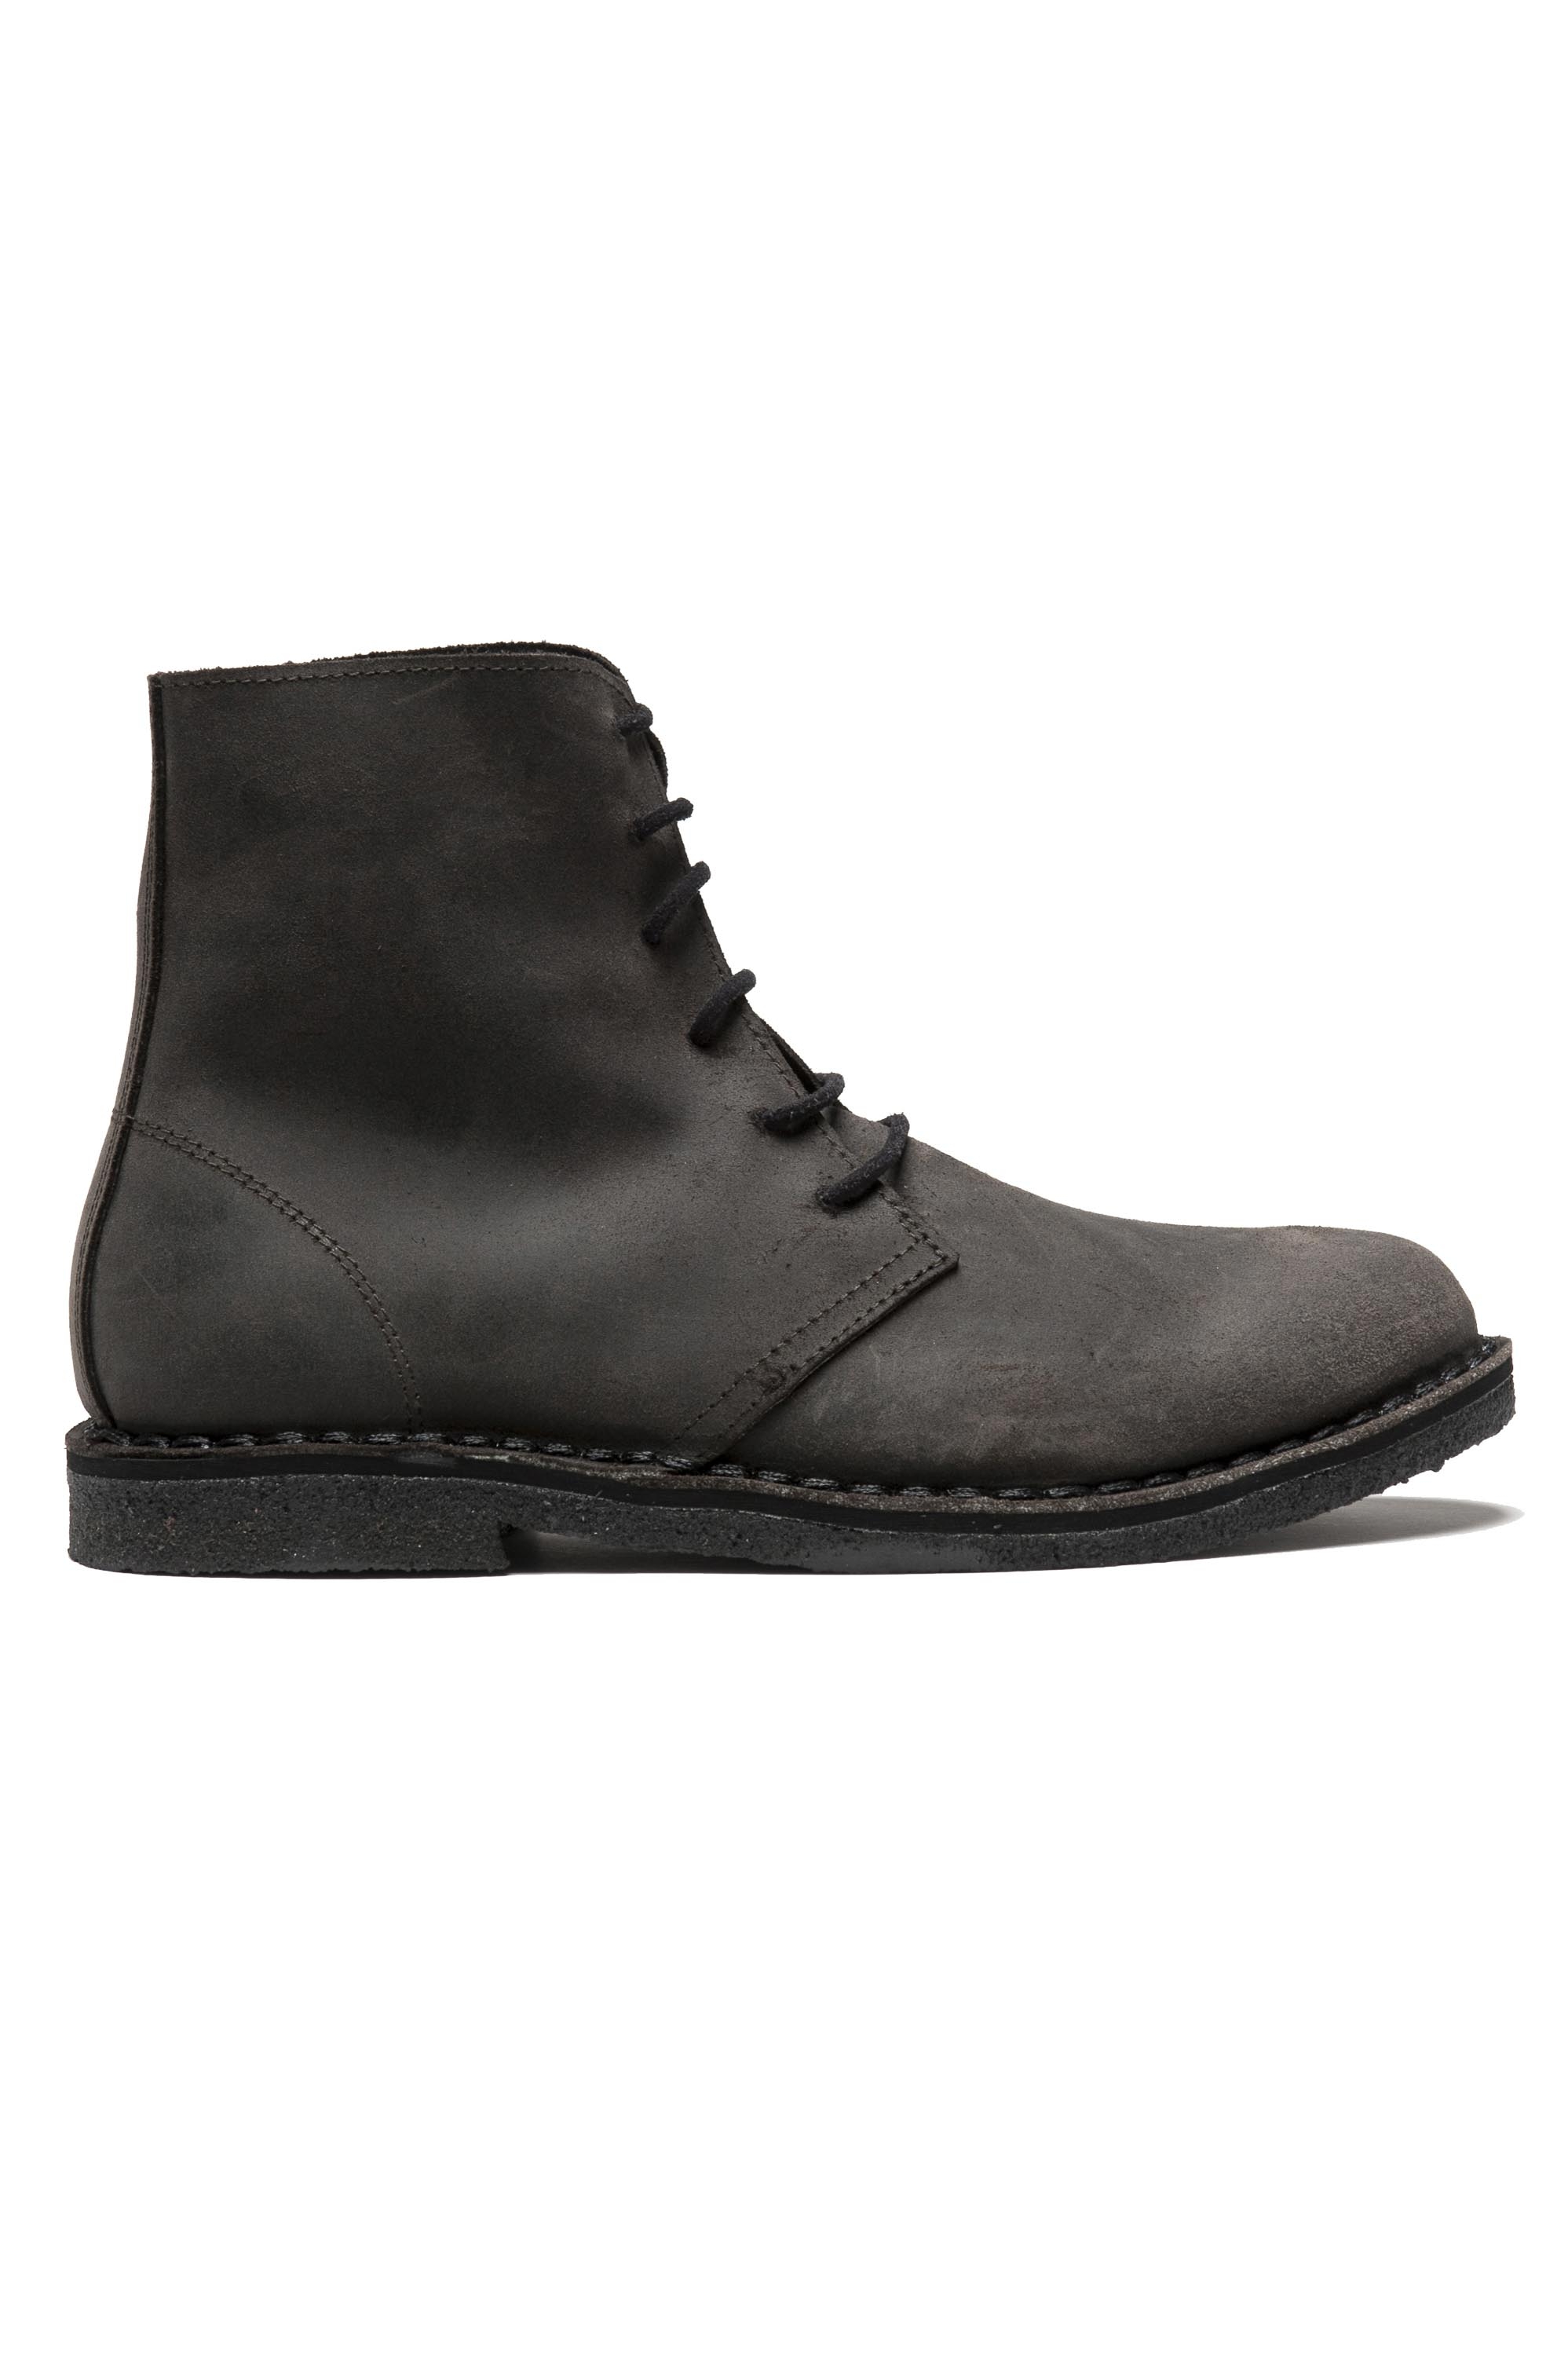 SBU 01512 Classic high top desert boots in brown waxed calfskin leather 01